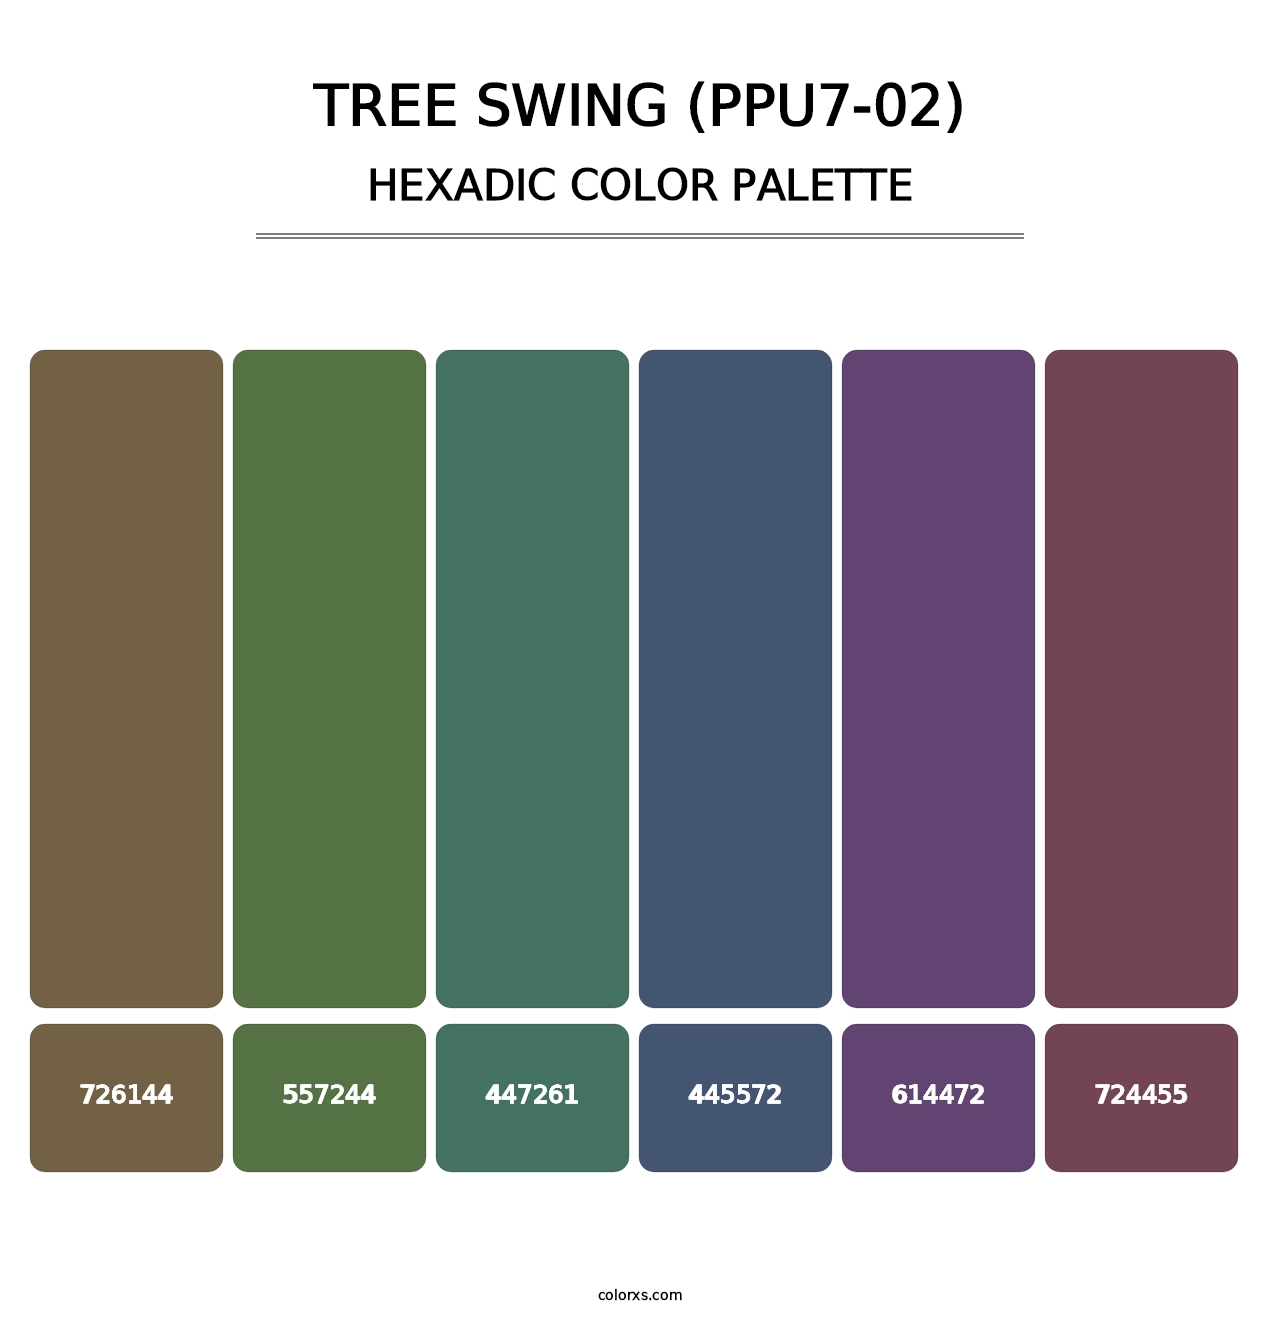 Tree Swing (PPU7-02) - Hexadic Color Palette